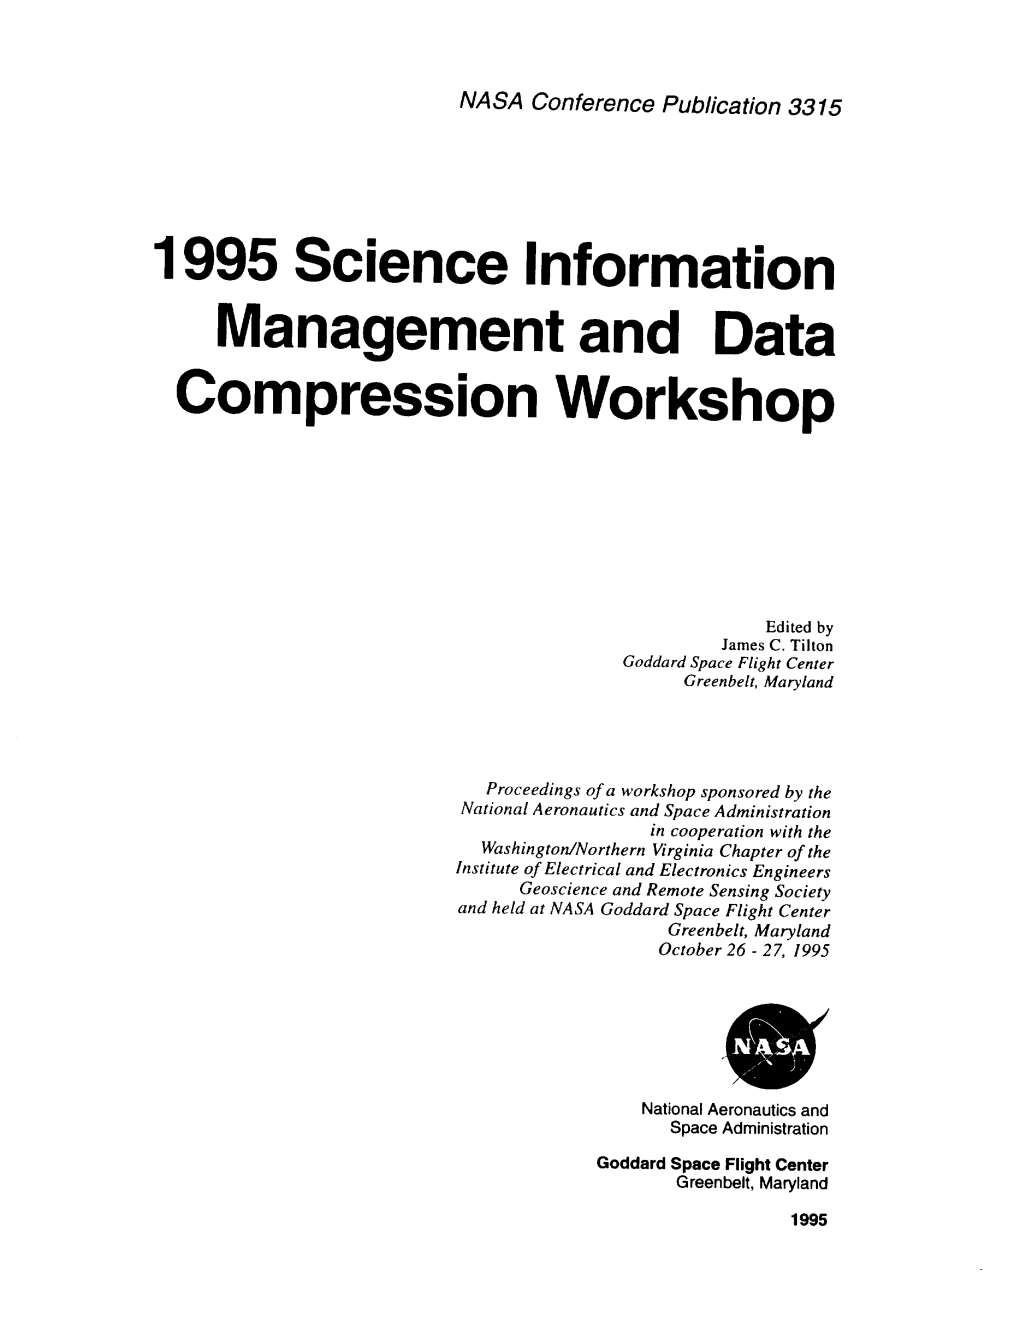 1995 Science Information Management and Data Compression Workshop